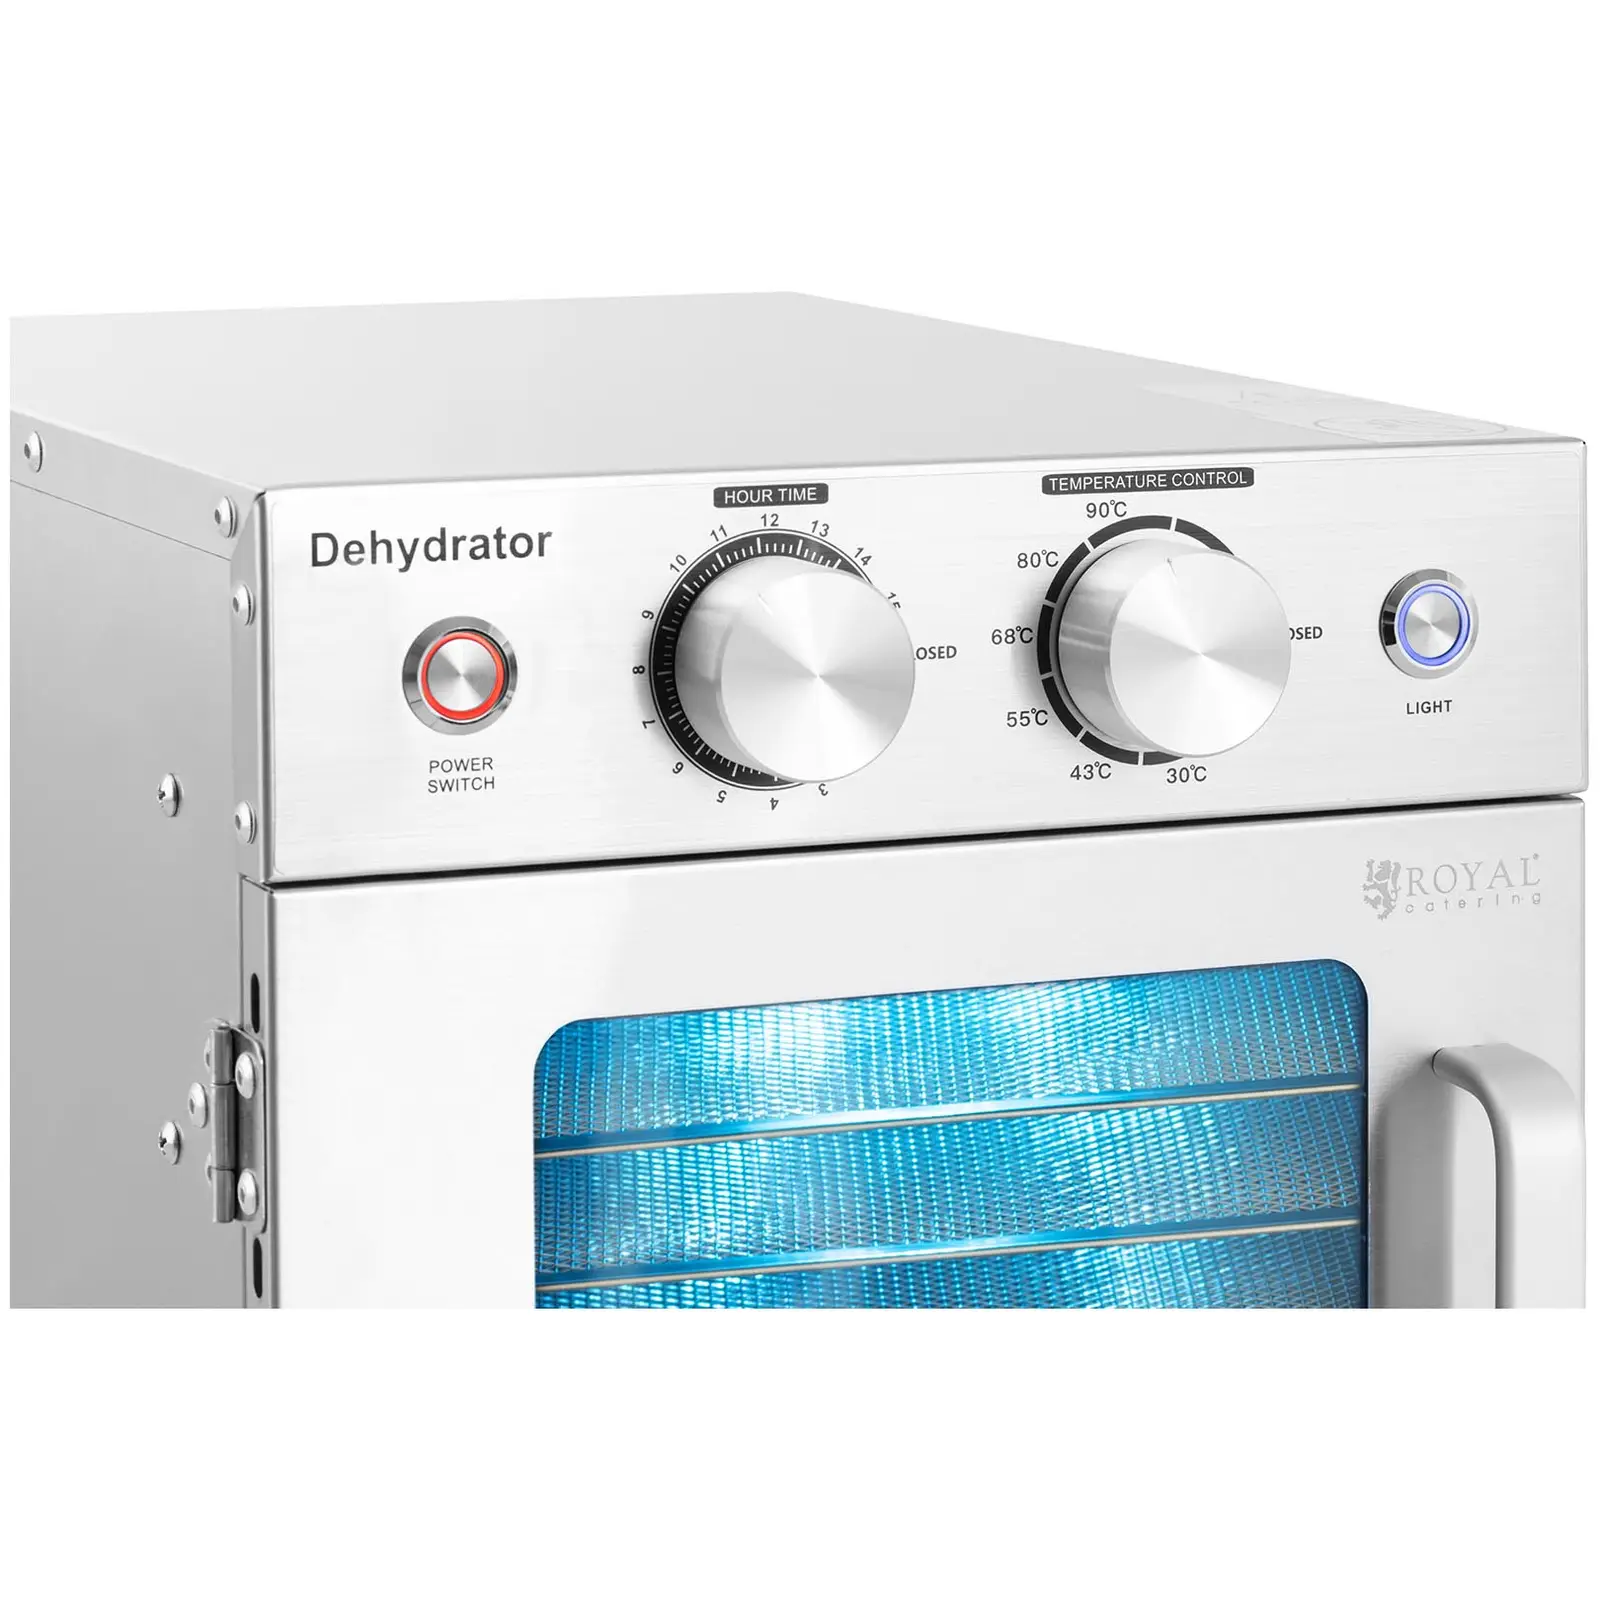 Deshidratador de alimentos - 500 W - Royal Catering - 6 niveles